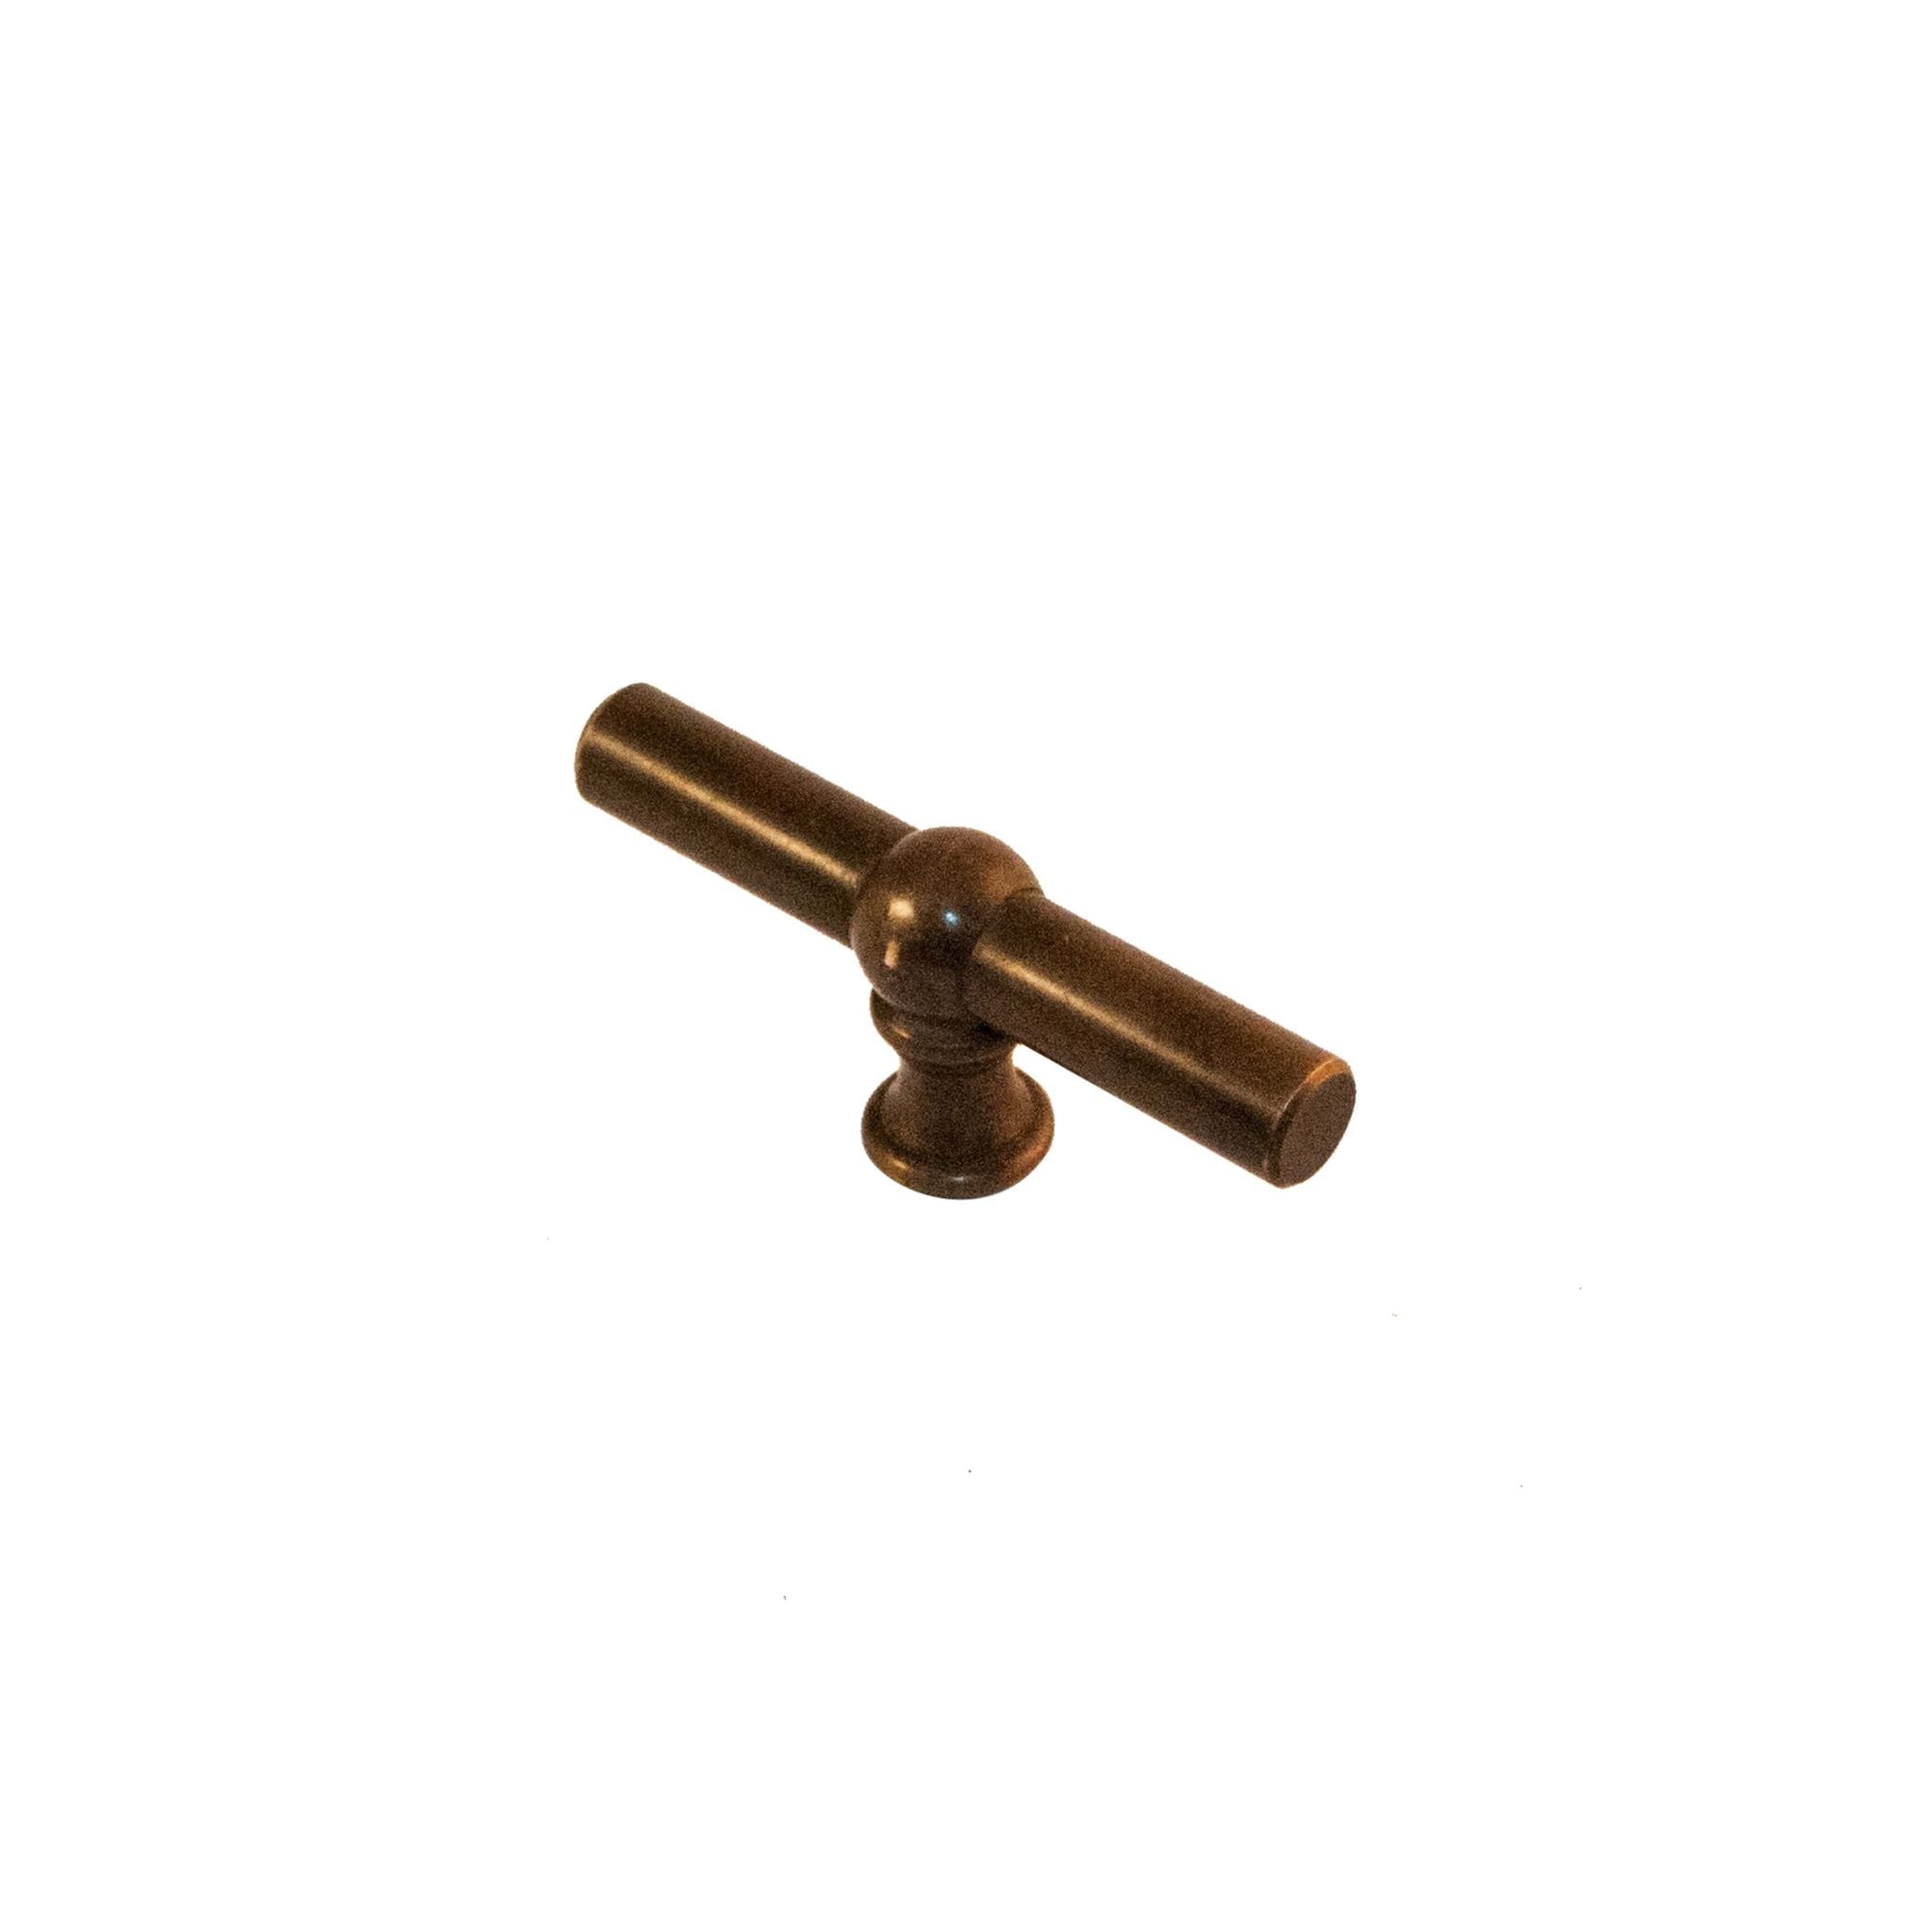 Novecento brass t shaped knob - ilbronzetto